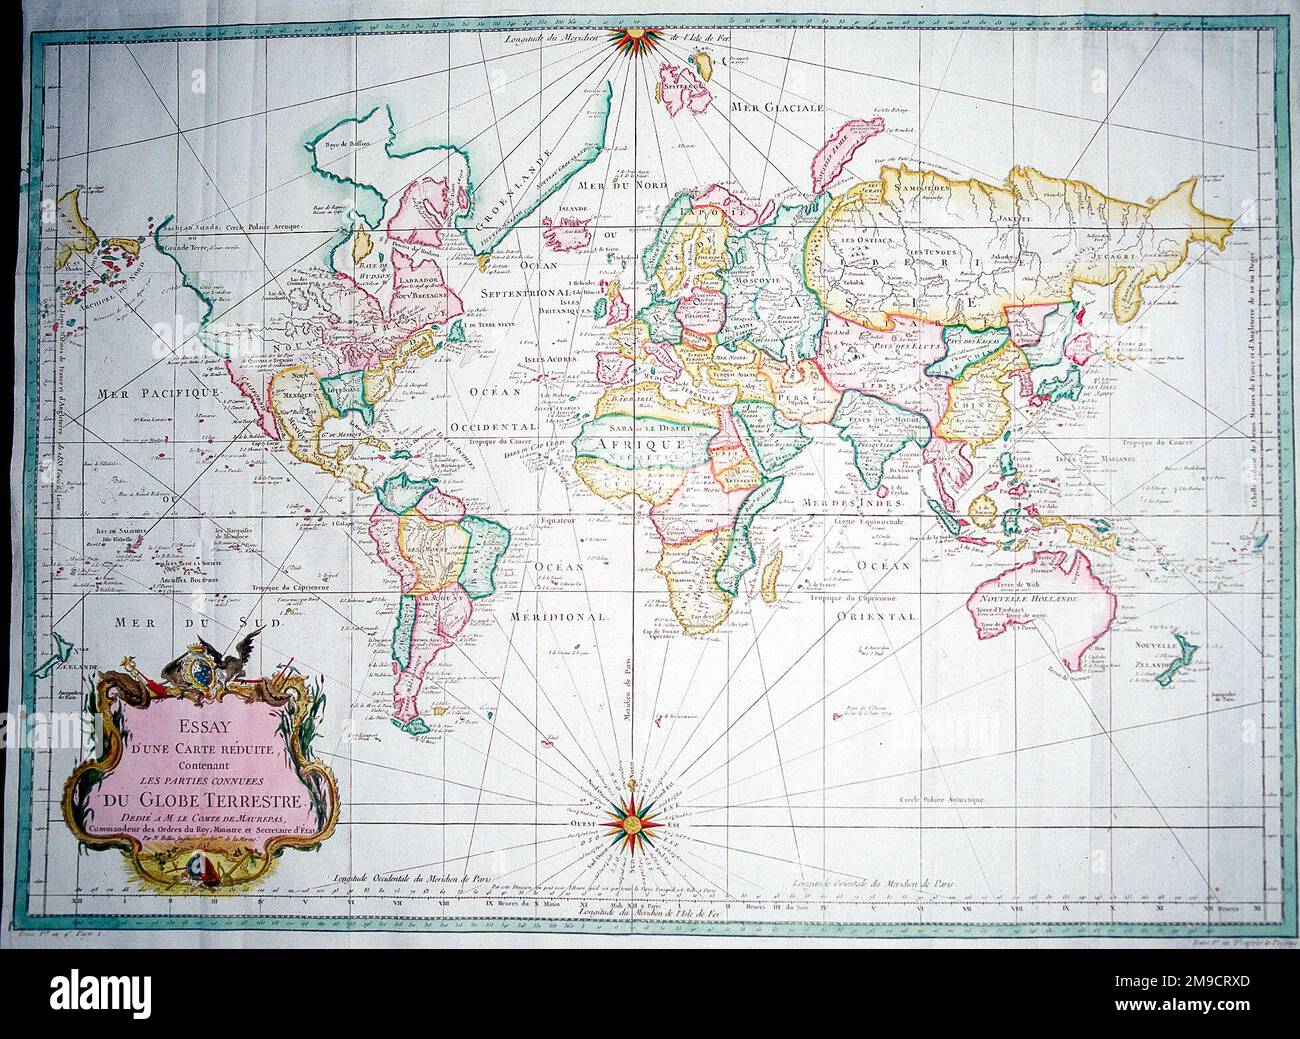 18th Century World Map - projection Mercator Photo Stock - Alamy